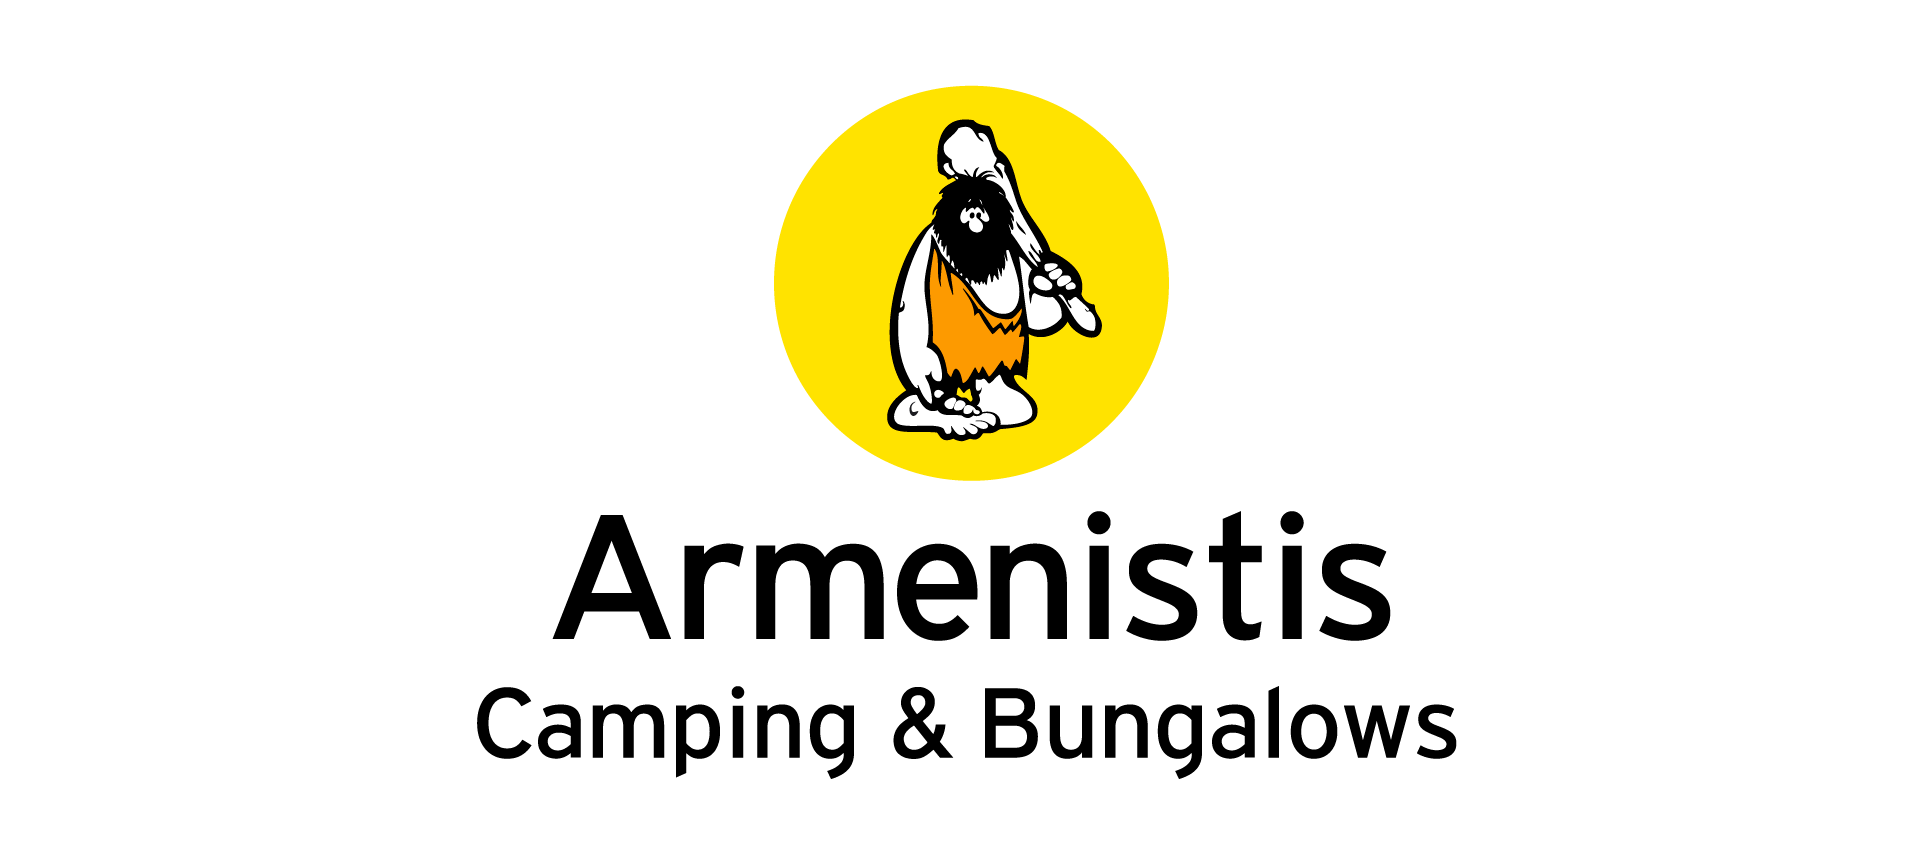 Armenistis camping